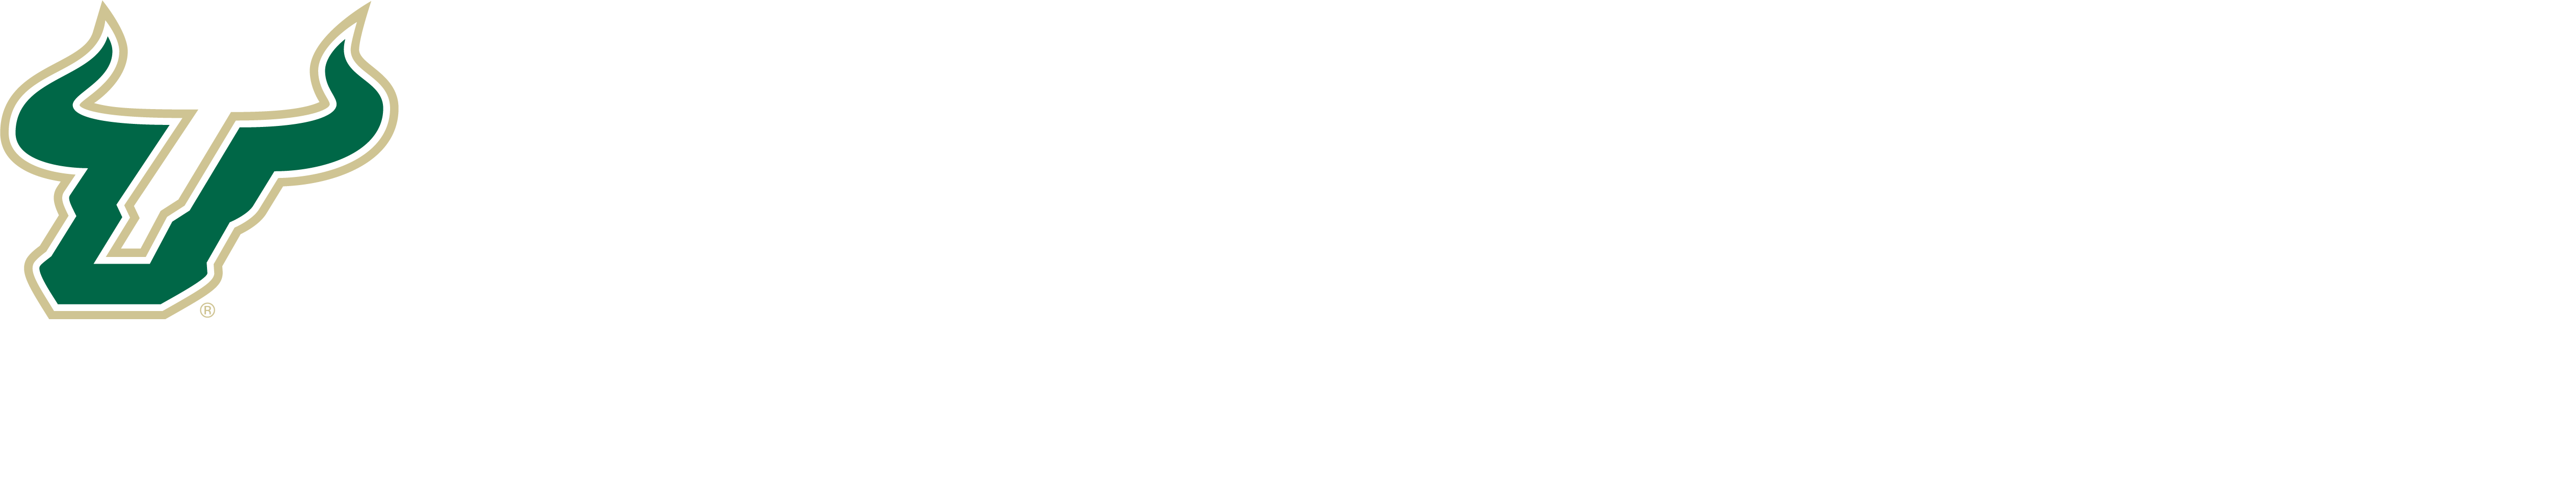 USF Corporate Training and Professional Education Logo